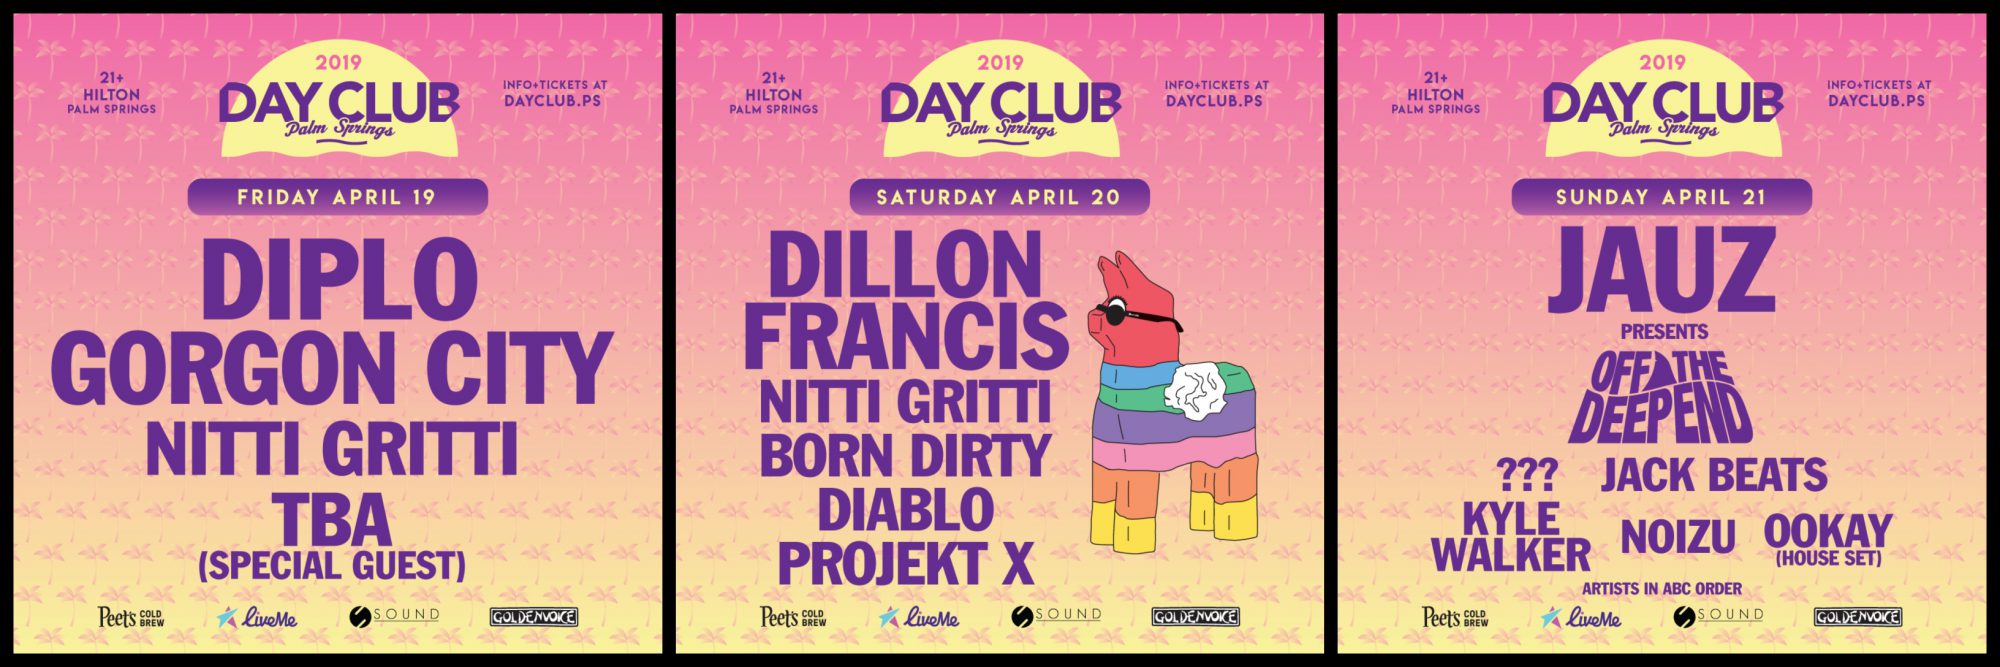 Day Club Palm Springs 2019 Lineup - Weekend 2